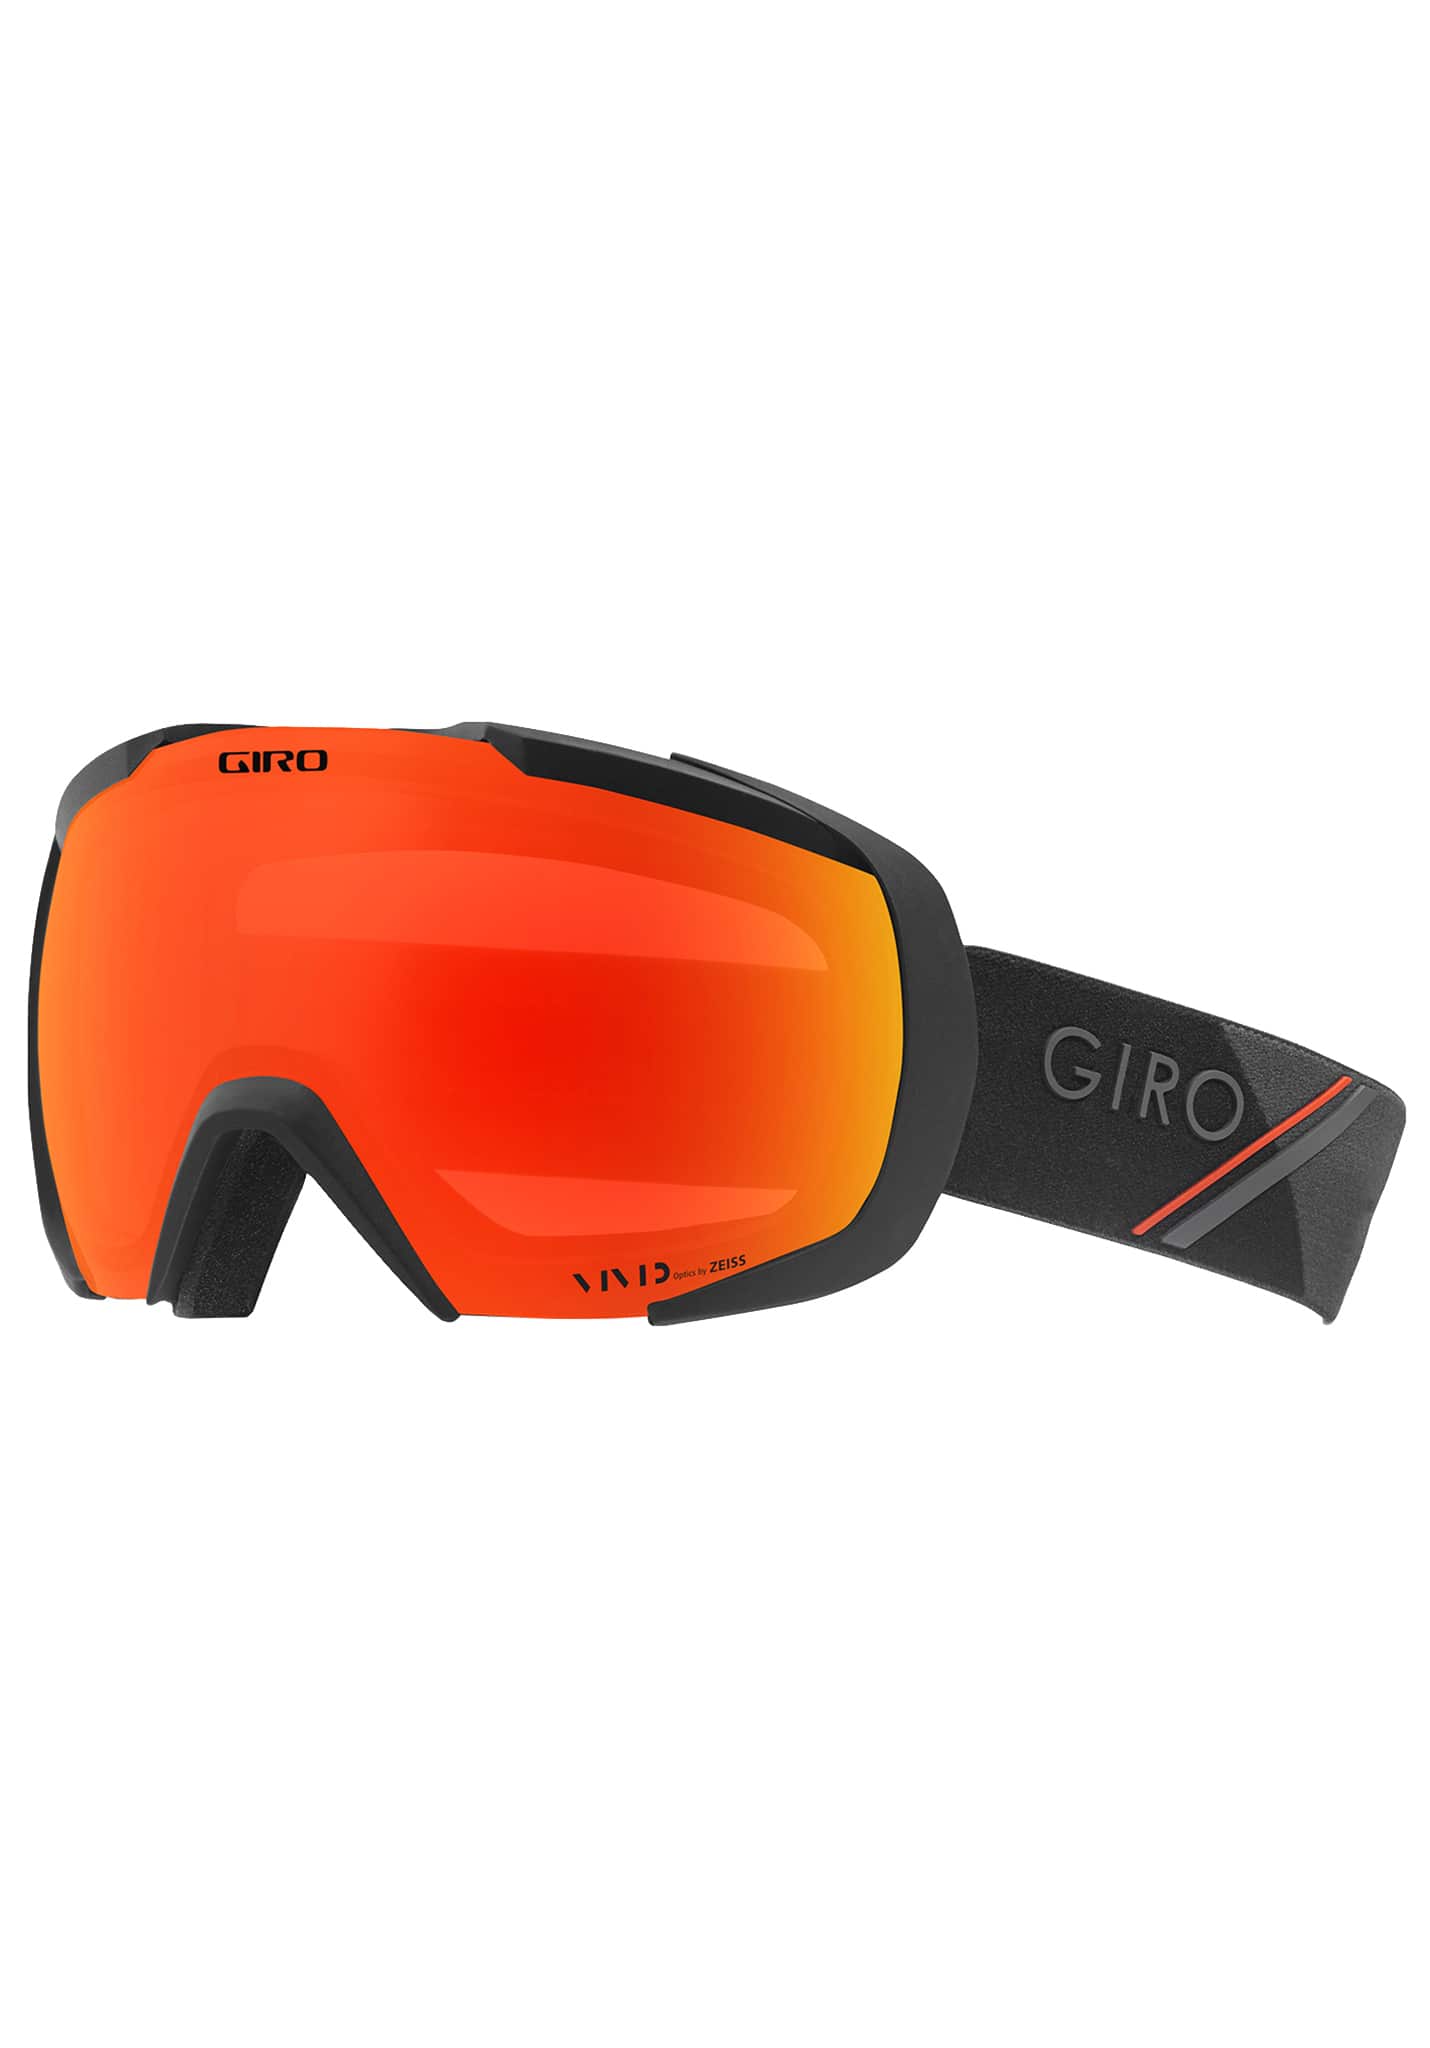 Giro Onset Snowboardbrillen schwarz/rot sporttech One Size